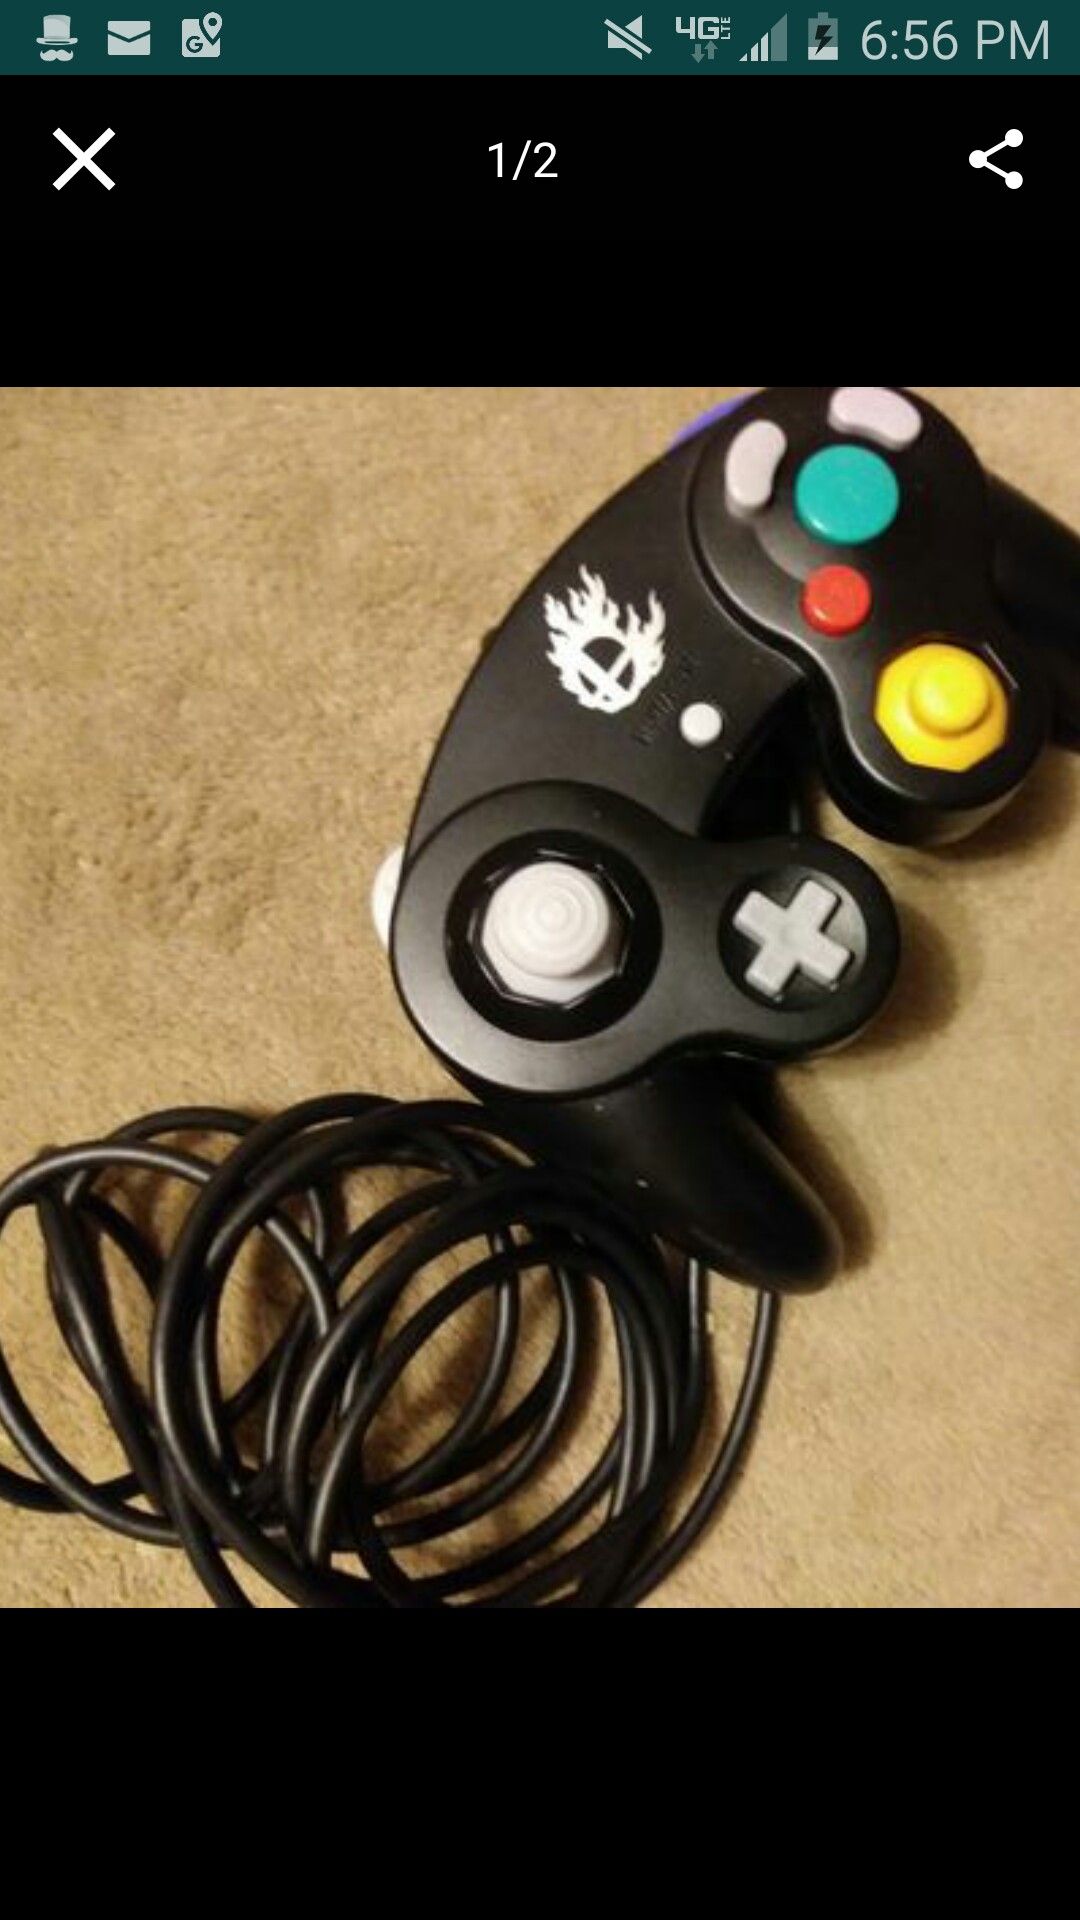 Official Nintendo super smash bros edition wii u black GameCube controller